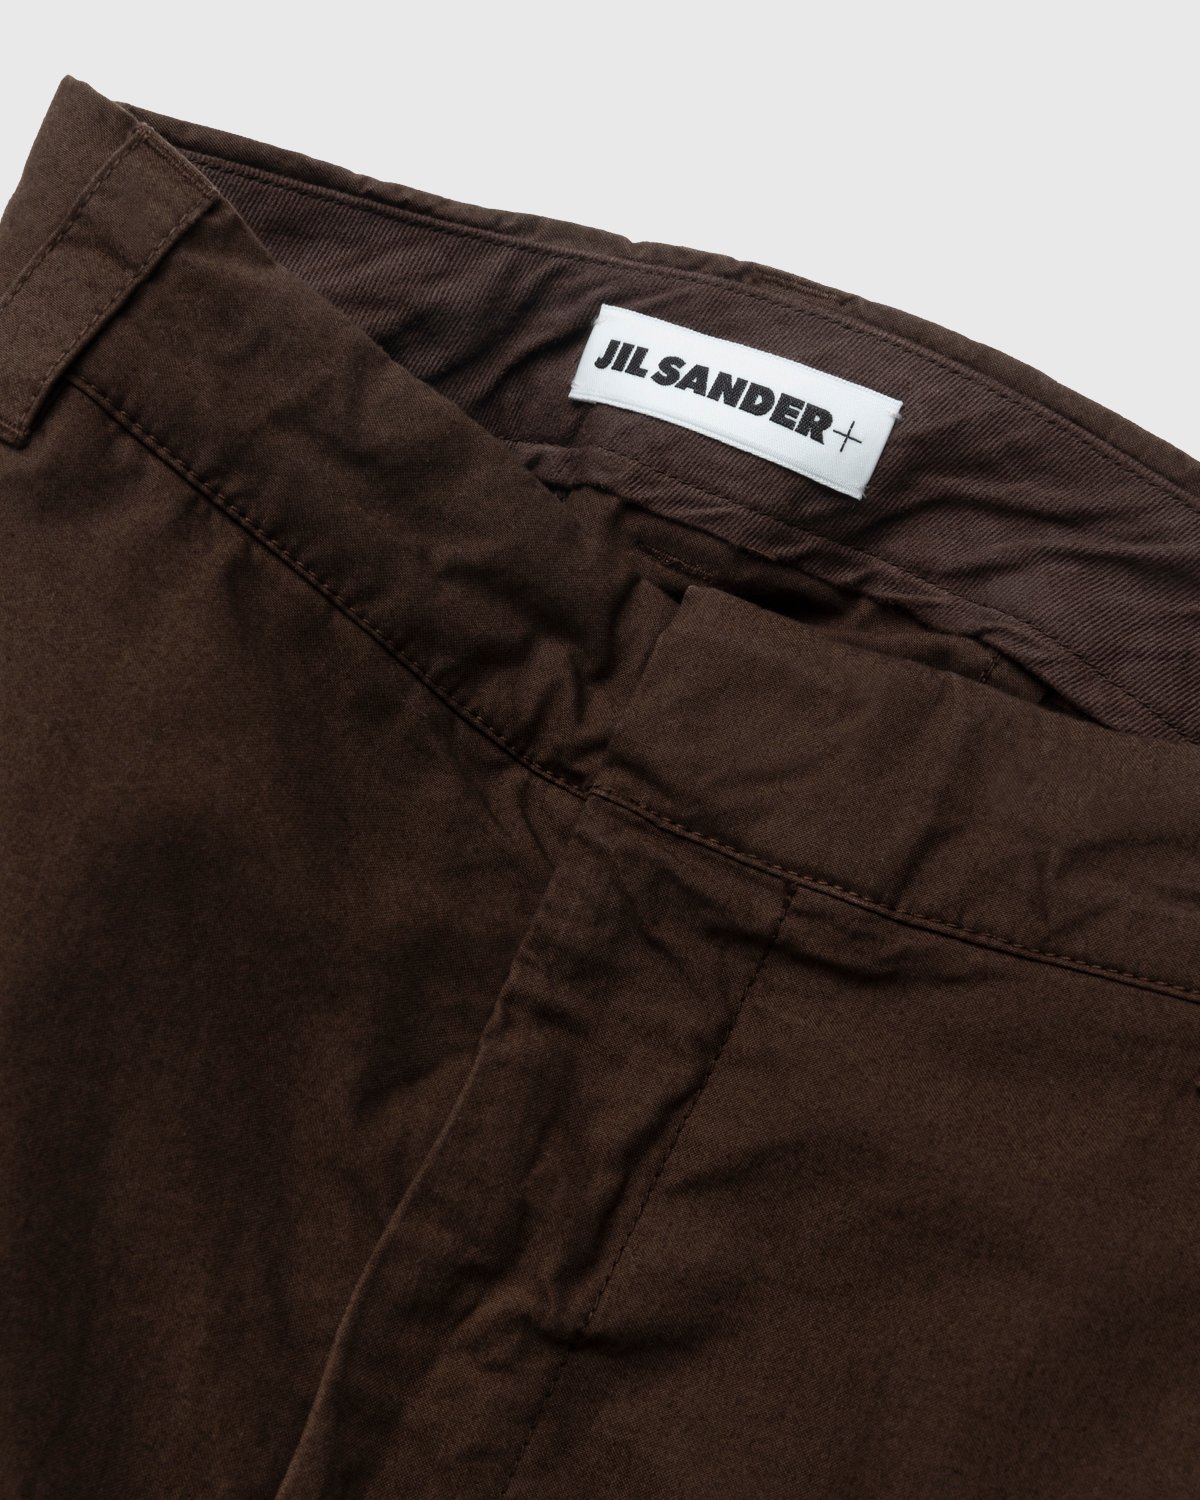 Jil Sander - Cotton Trousers Dark Brown - Clothing - Brown - Image 4